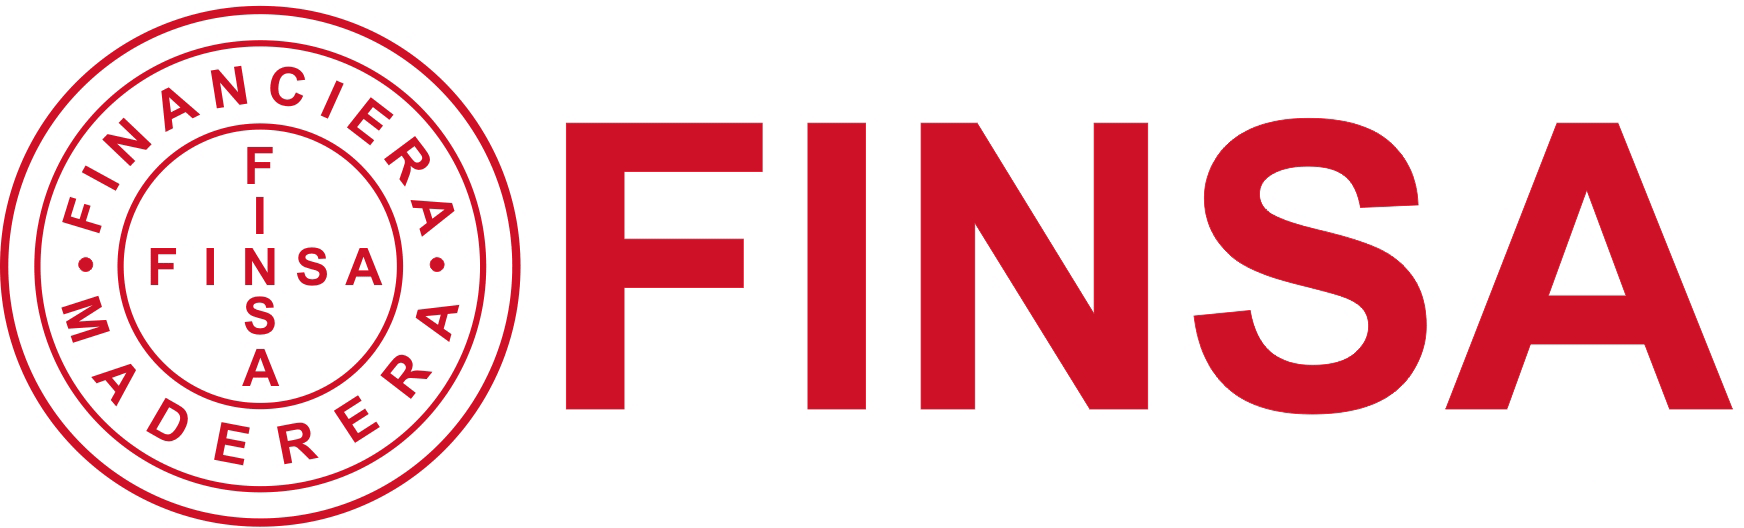 Finsa logo